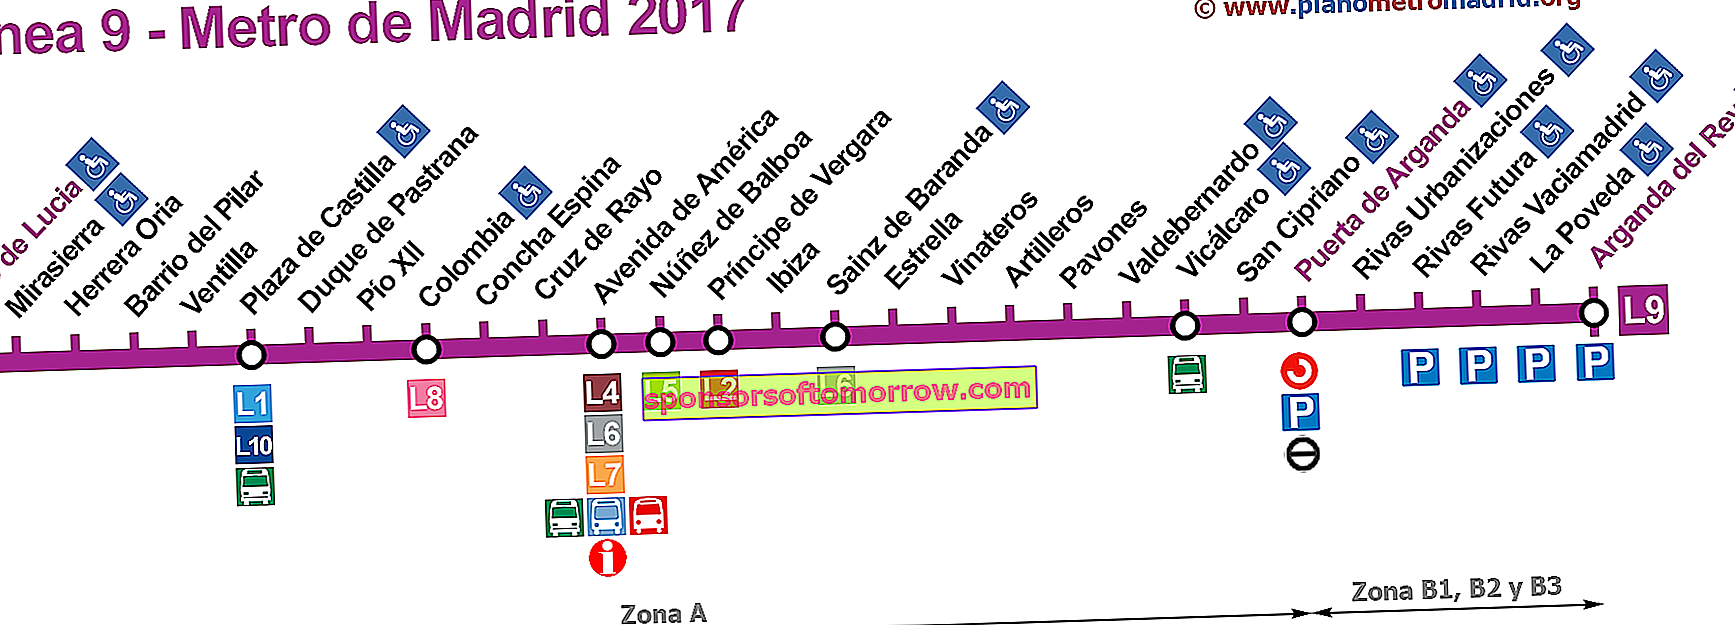 Ligne 9 du métro de Madrid